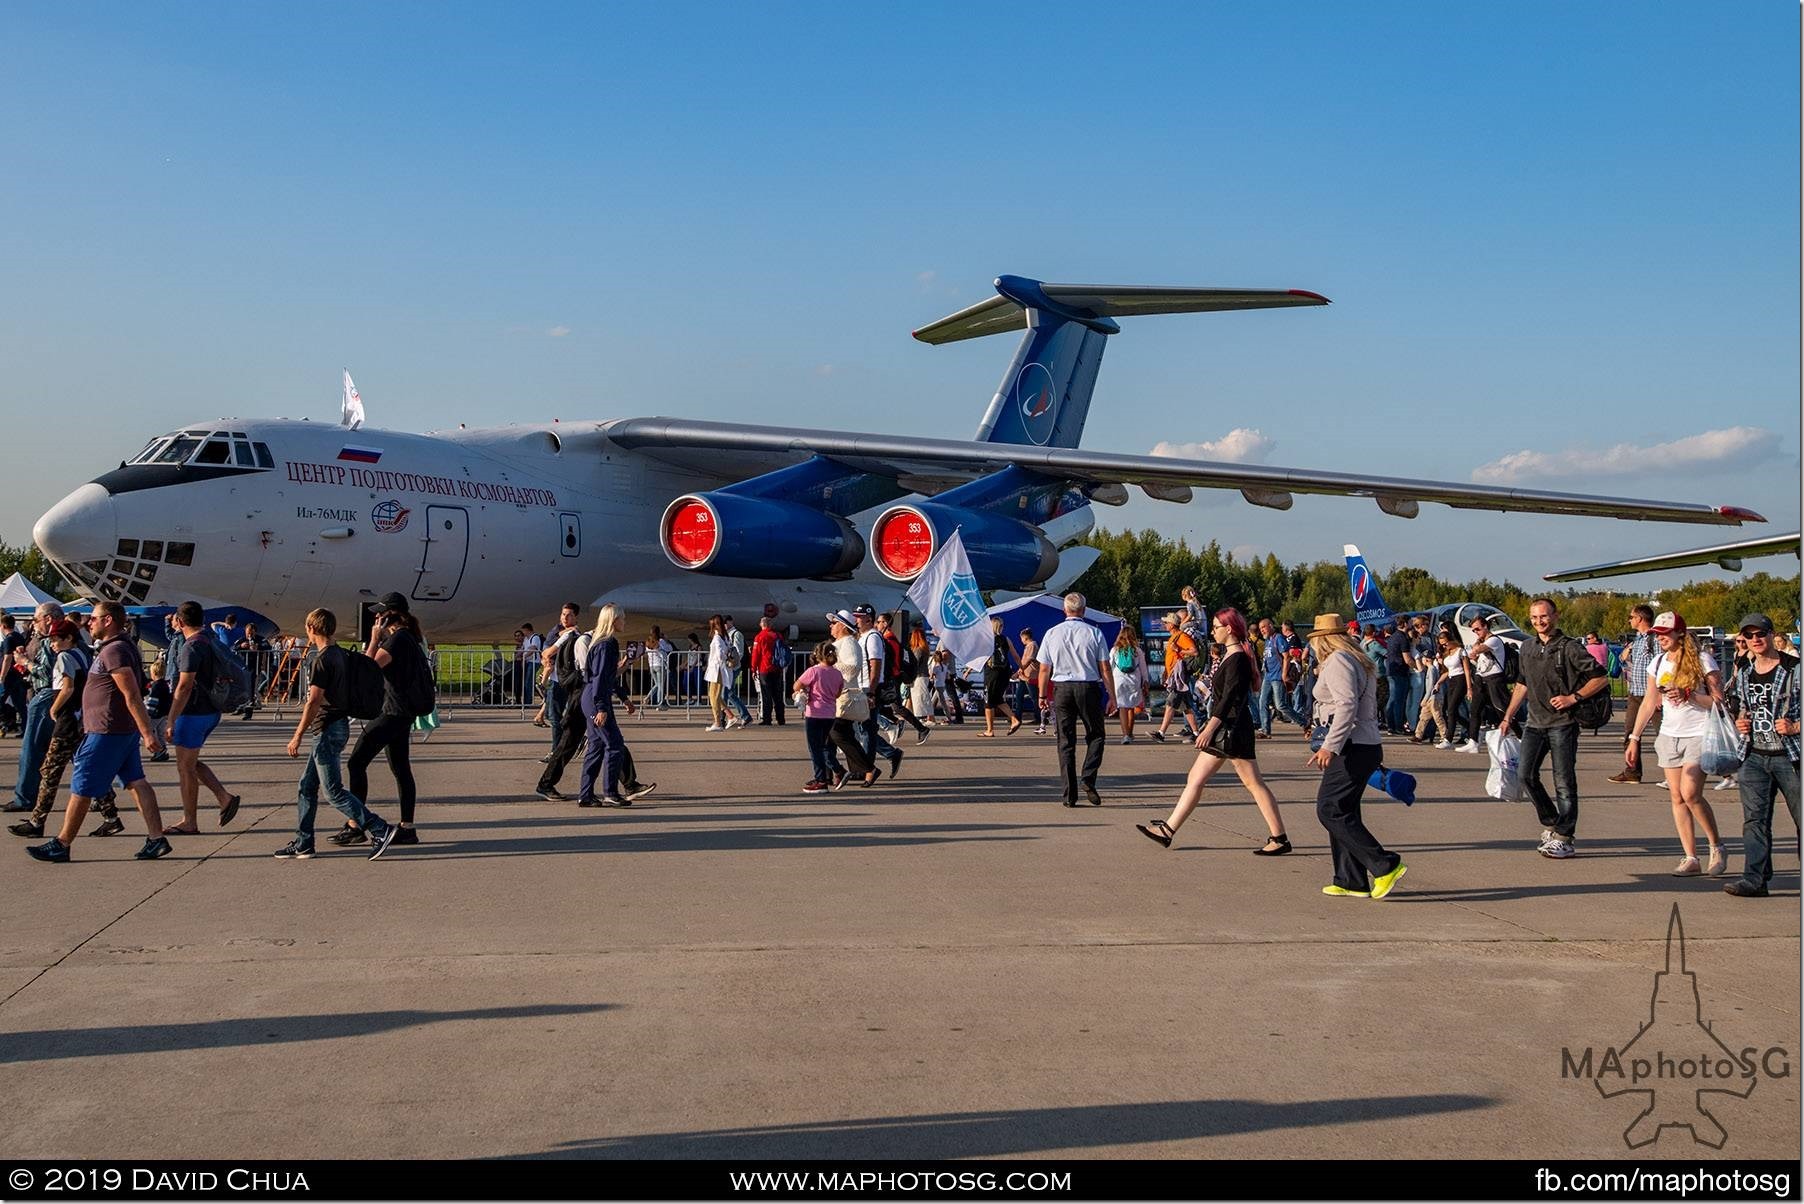 Ilyushin Il-76 strategic airlifter